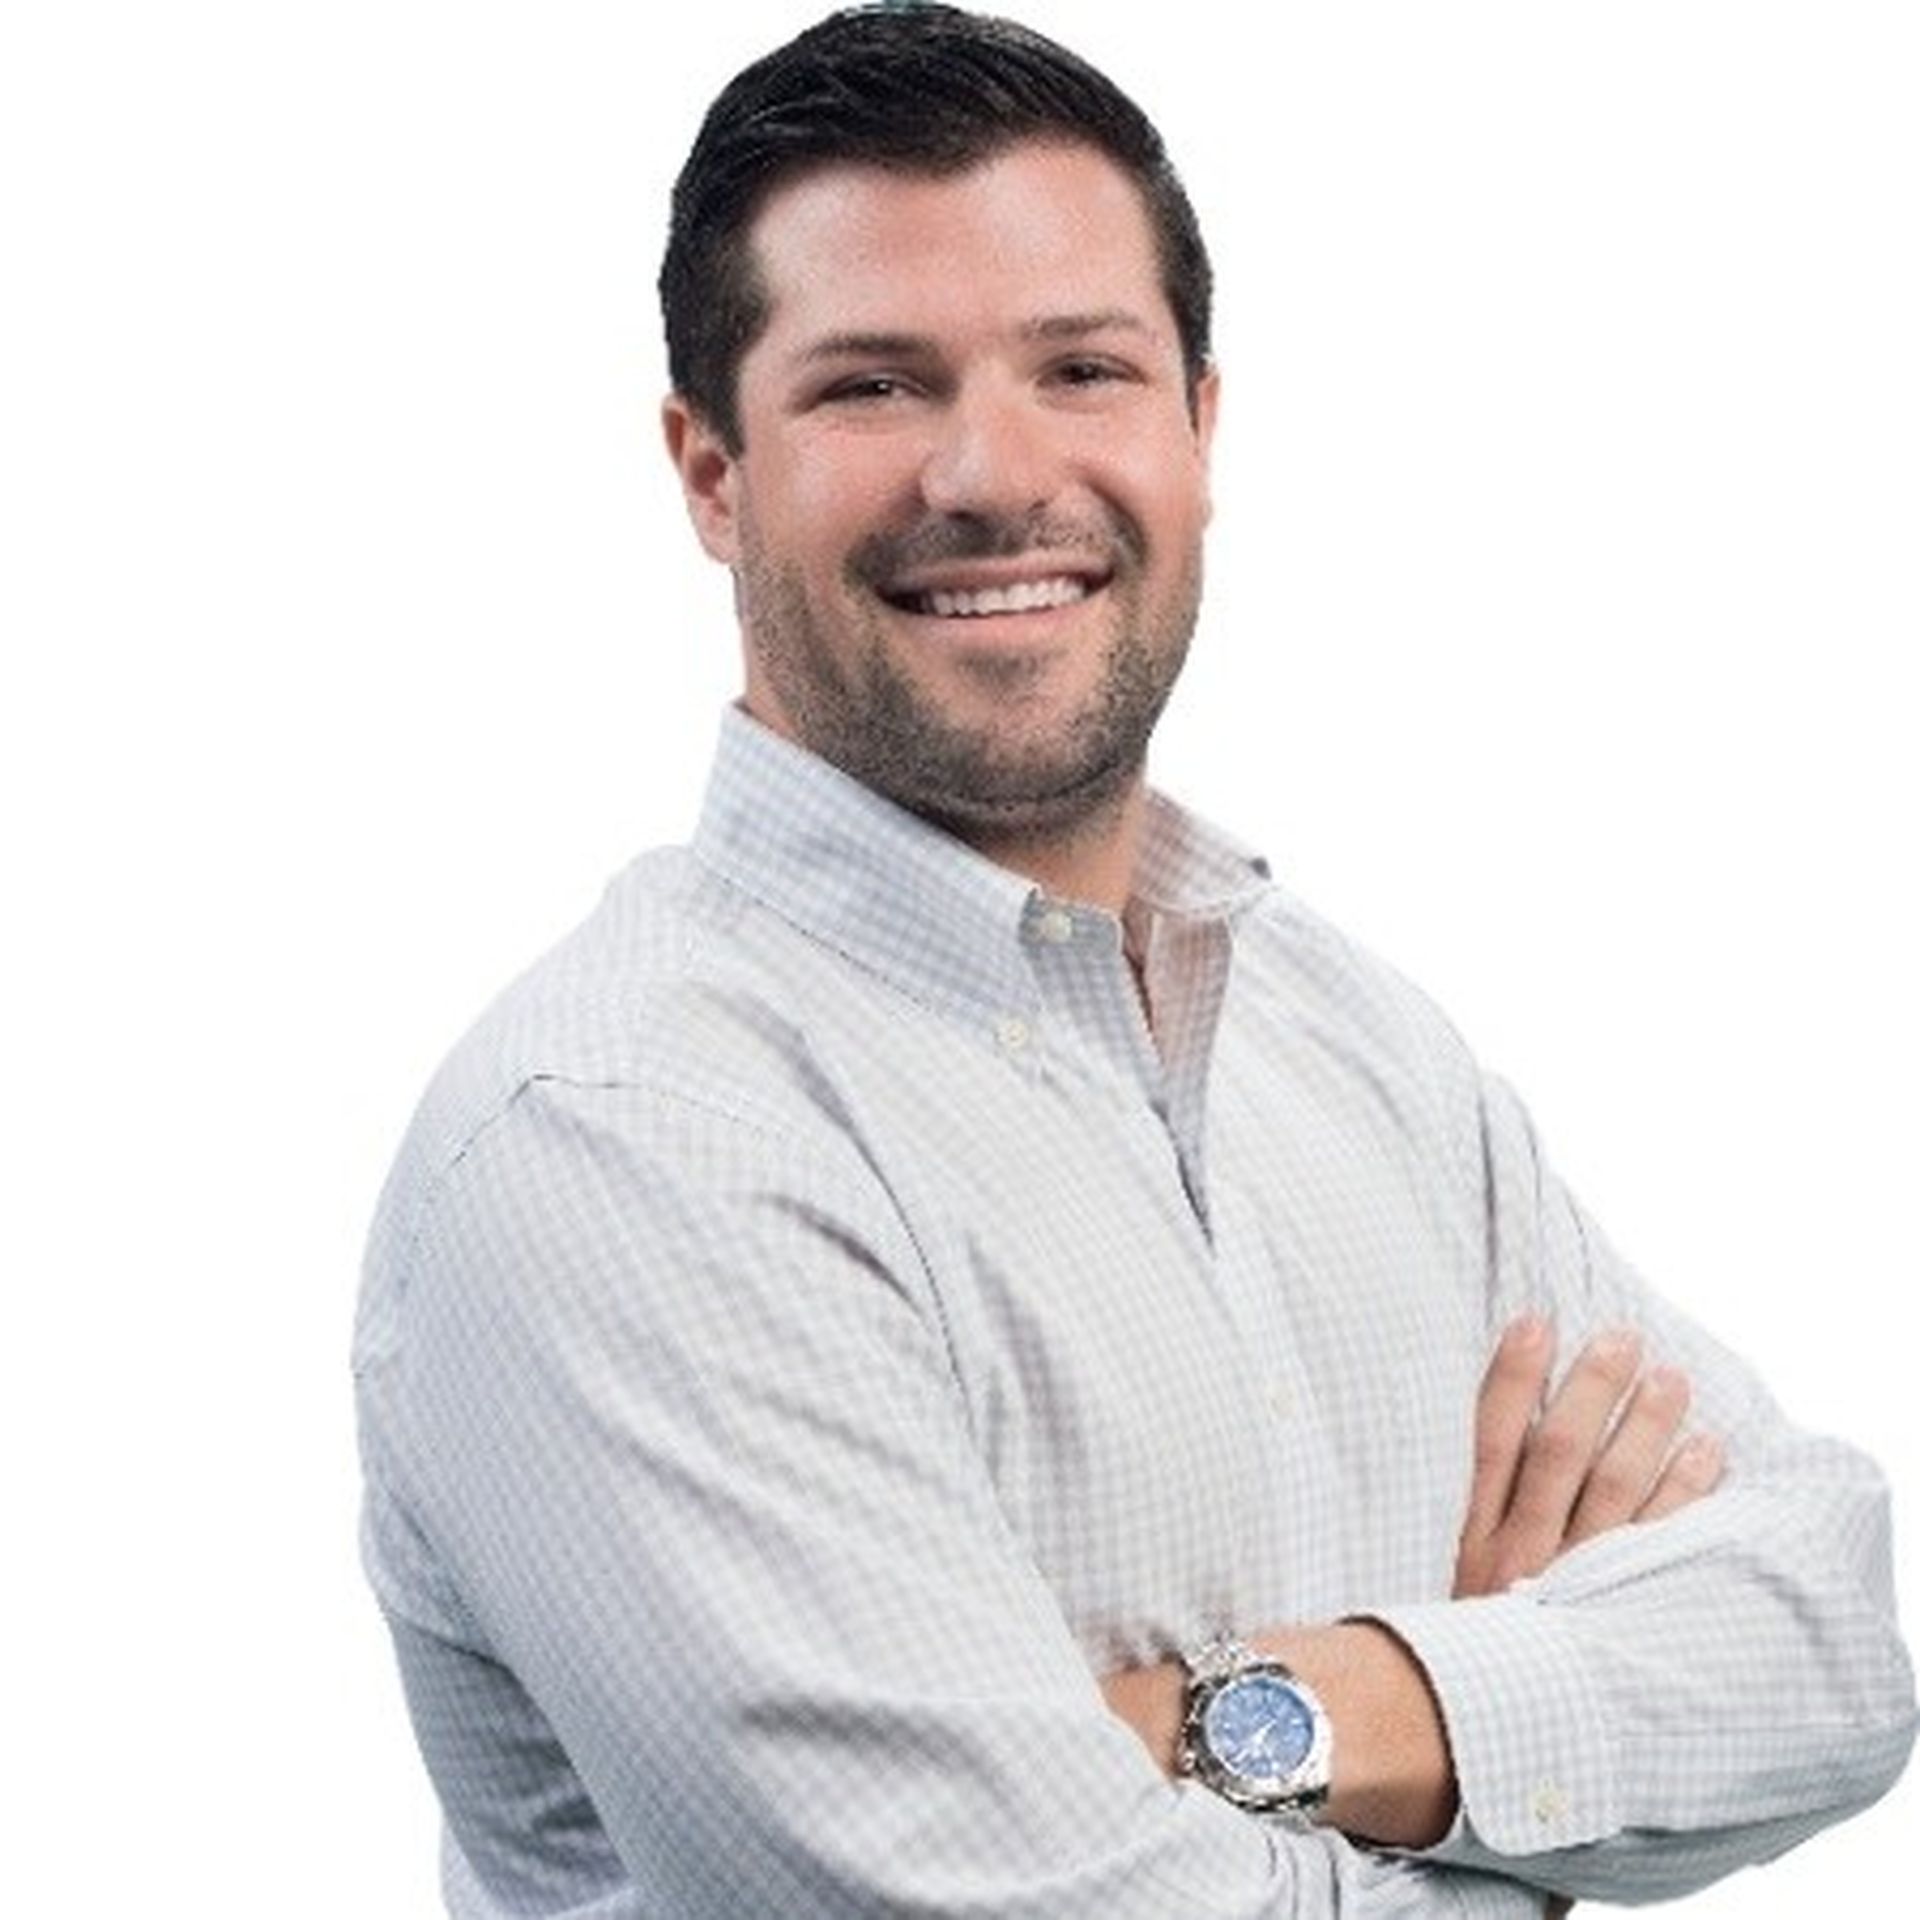 LinkedIn: FloridaFunders Director of Business Development Saxon Baum